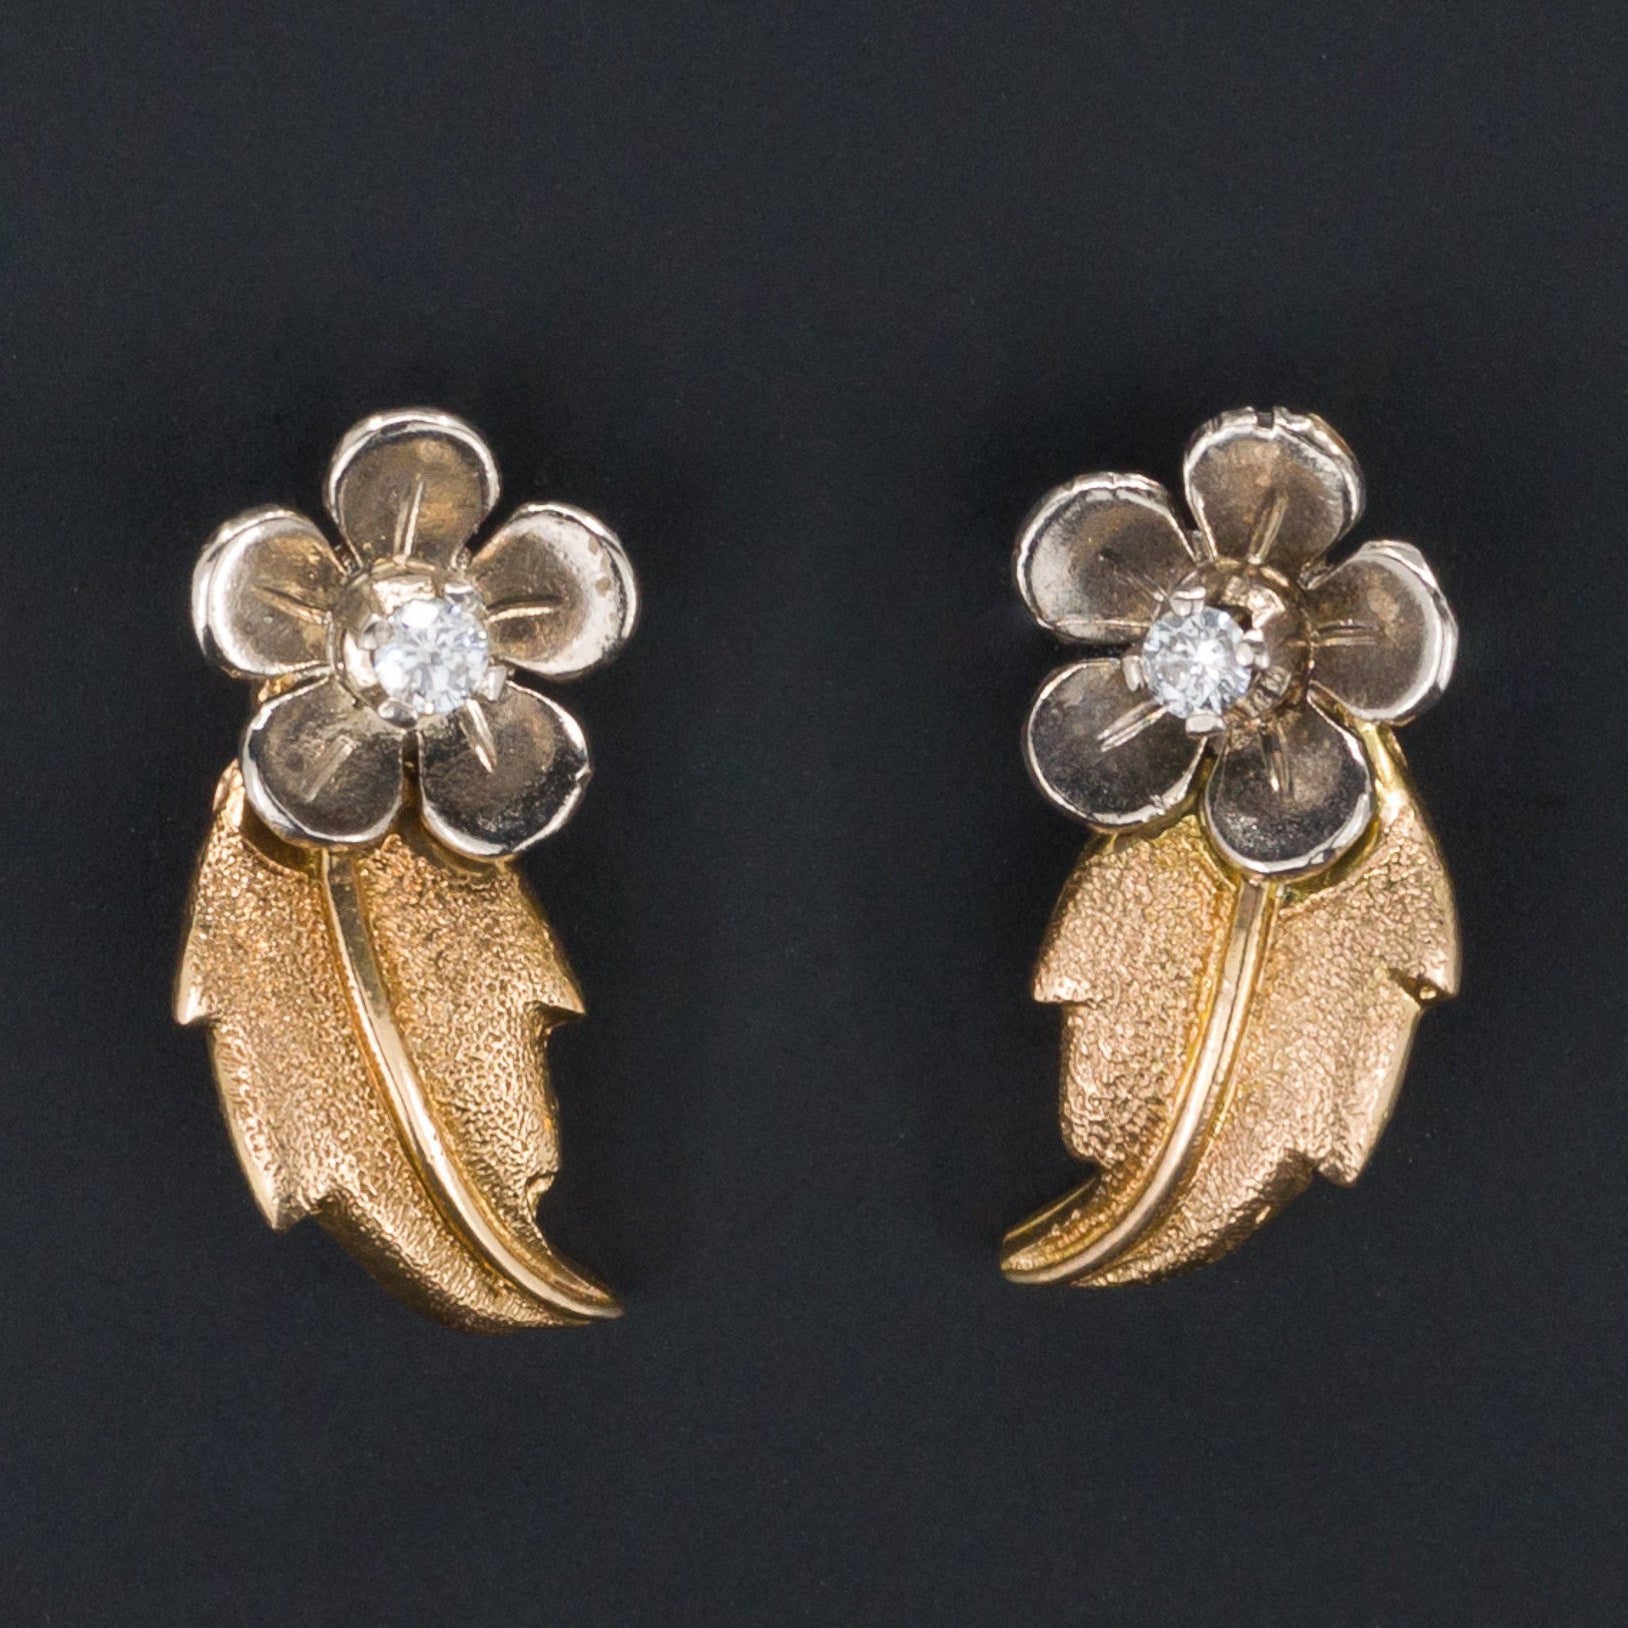 Flower Earrings | Diamond Flower Earrings | 14k White & Yellow Gold Earrings with Gold Filled Backs | Pin Conversion Earrings